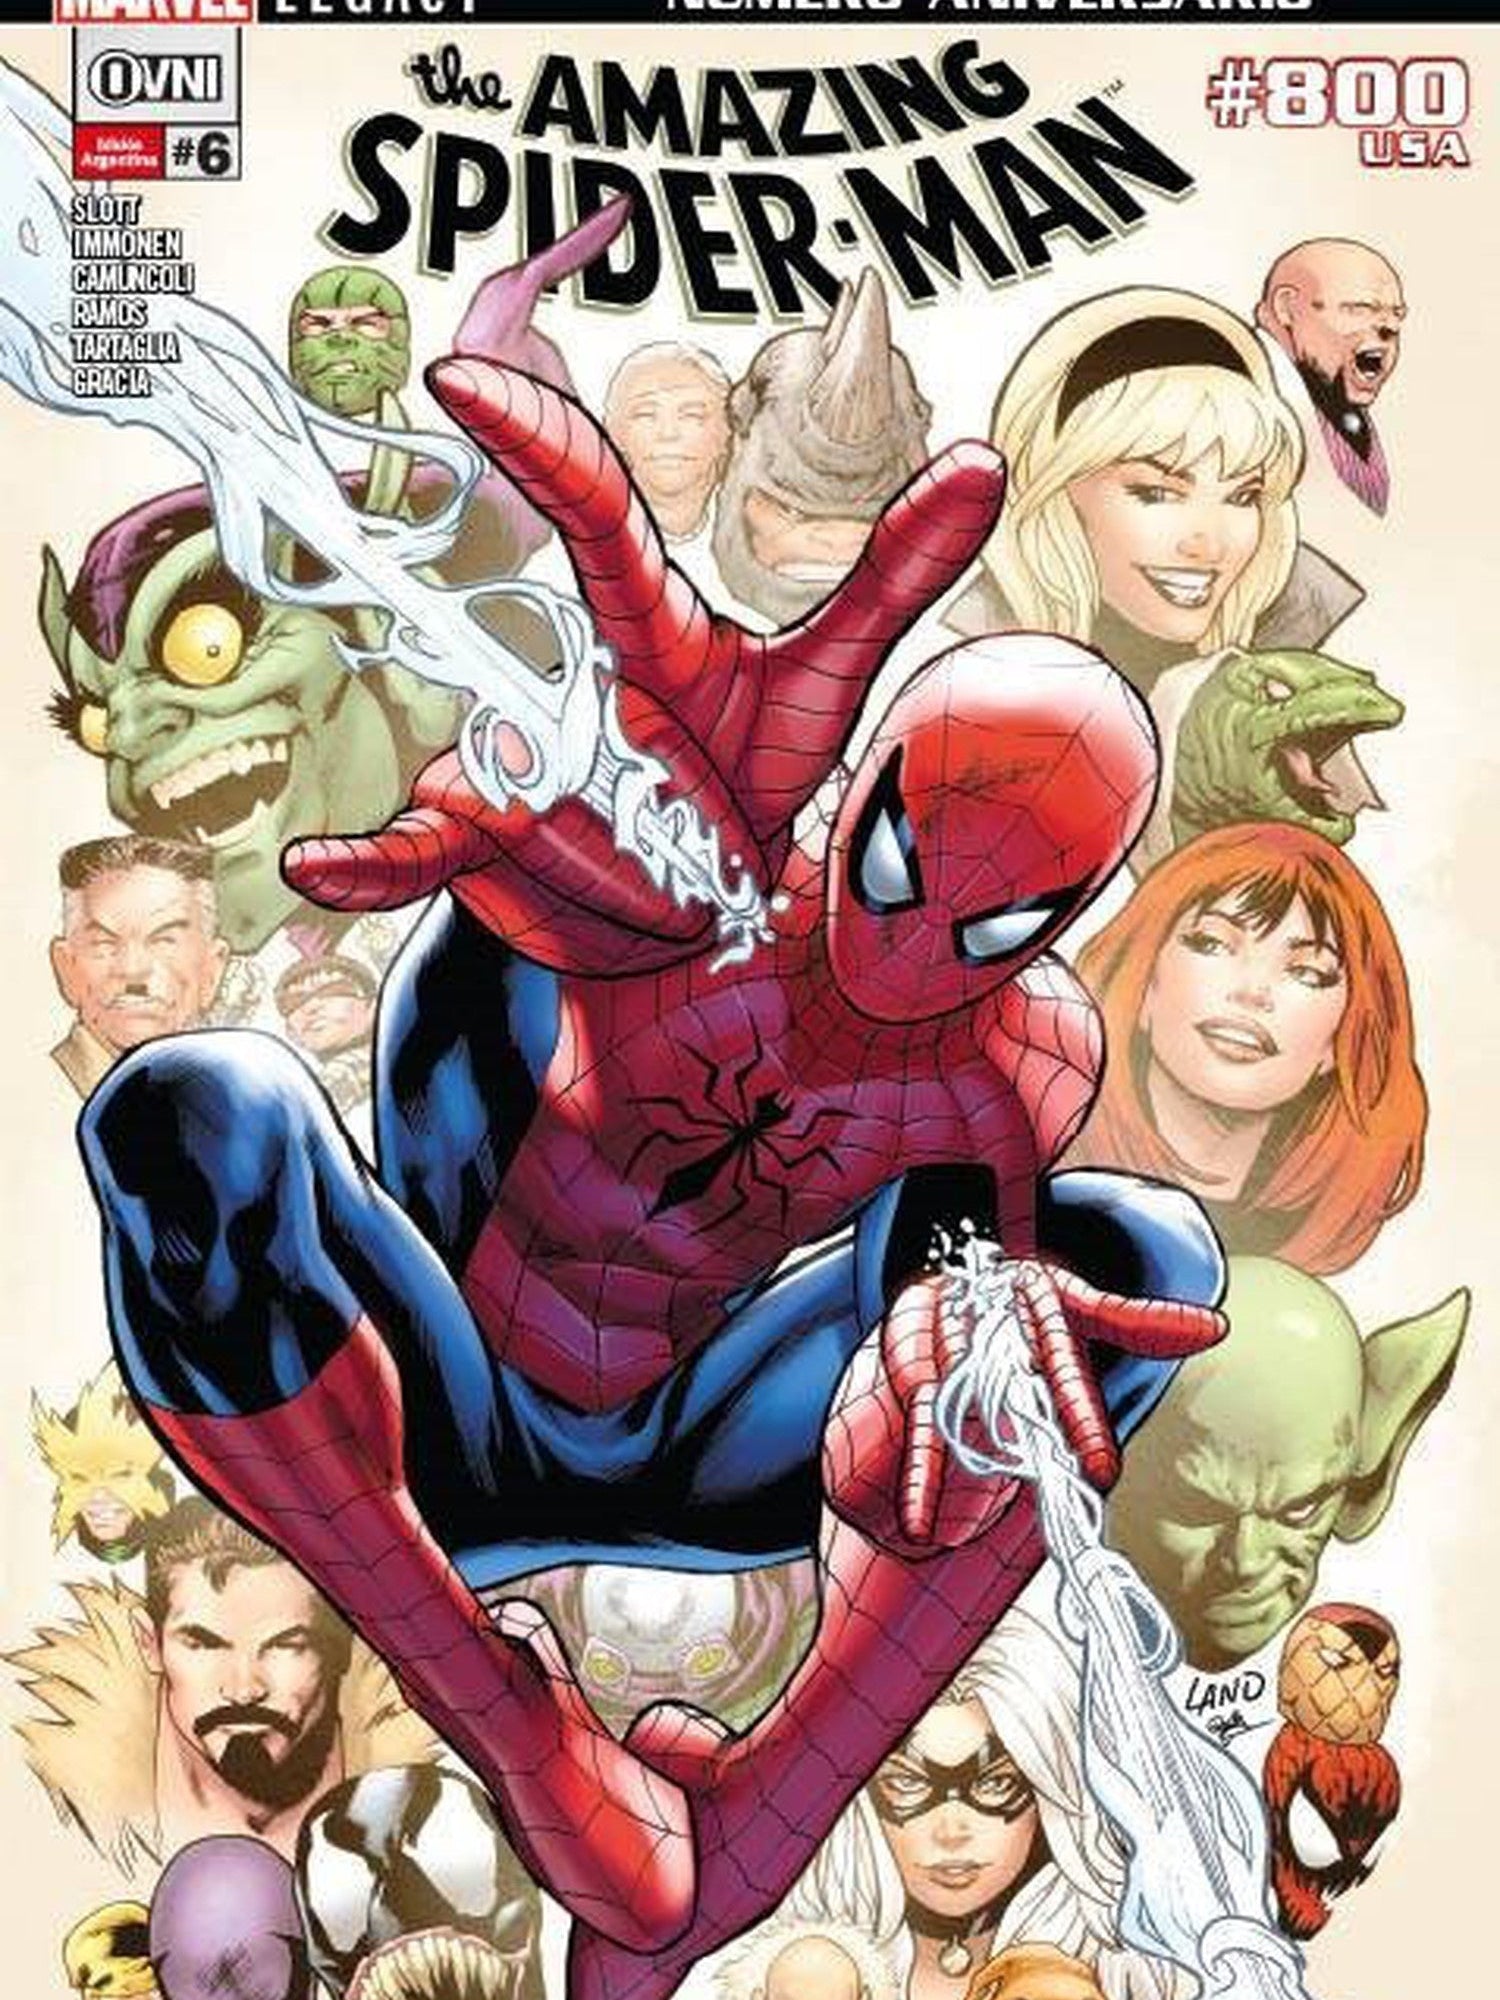 Marvel Legacy: Amazing Spider-Man #6 Número Aniversario #800 OVNI Press ENcuadrocomics